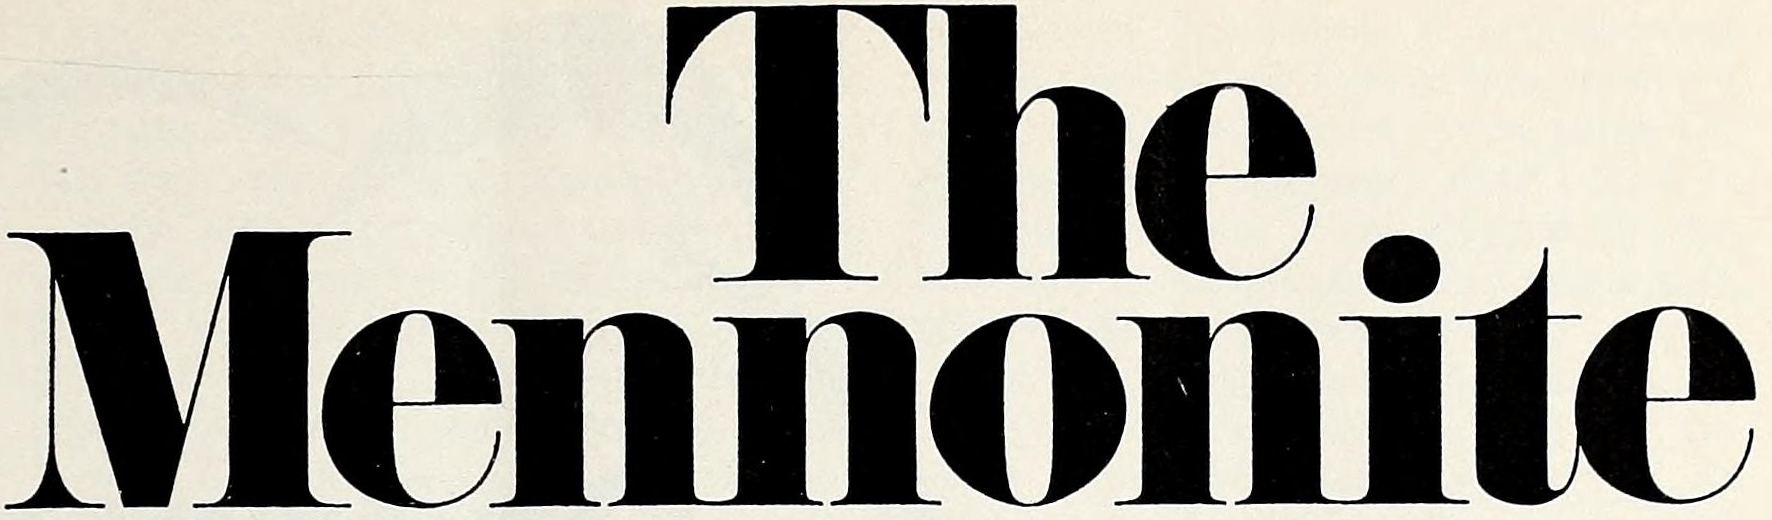 “The Mennonite” logo, circa 1973